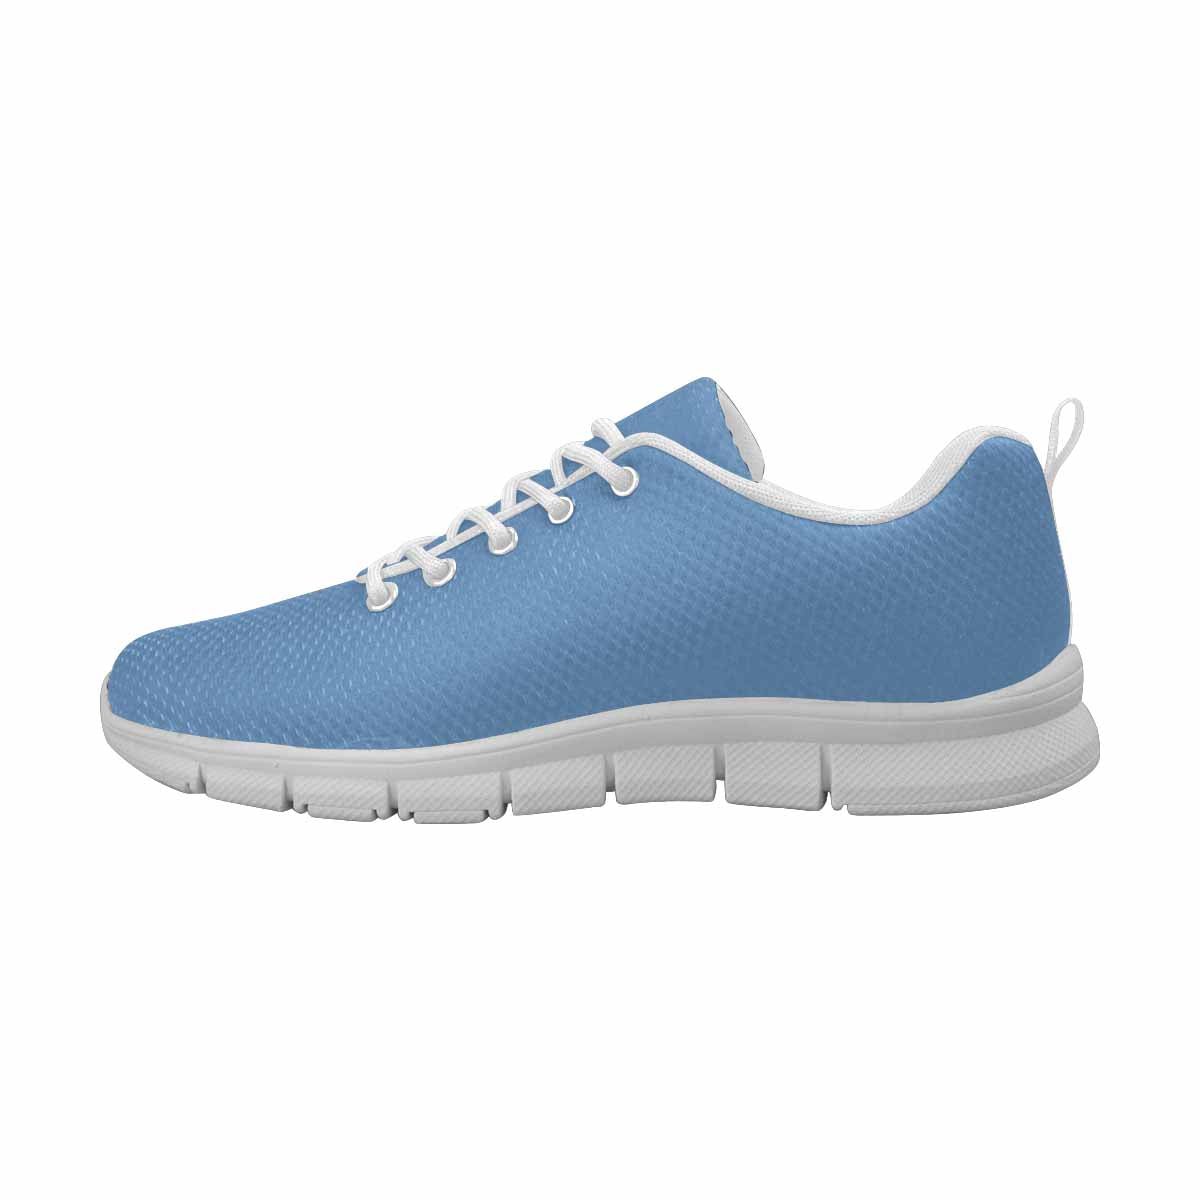 Uniquely You Sneakers for Men, Blue Gray - Running Shoes - KRE Prime Deals